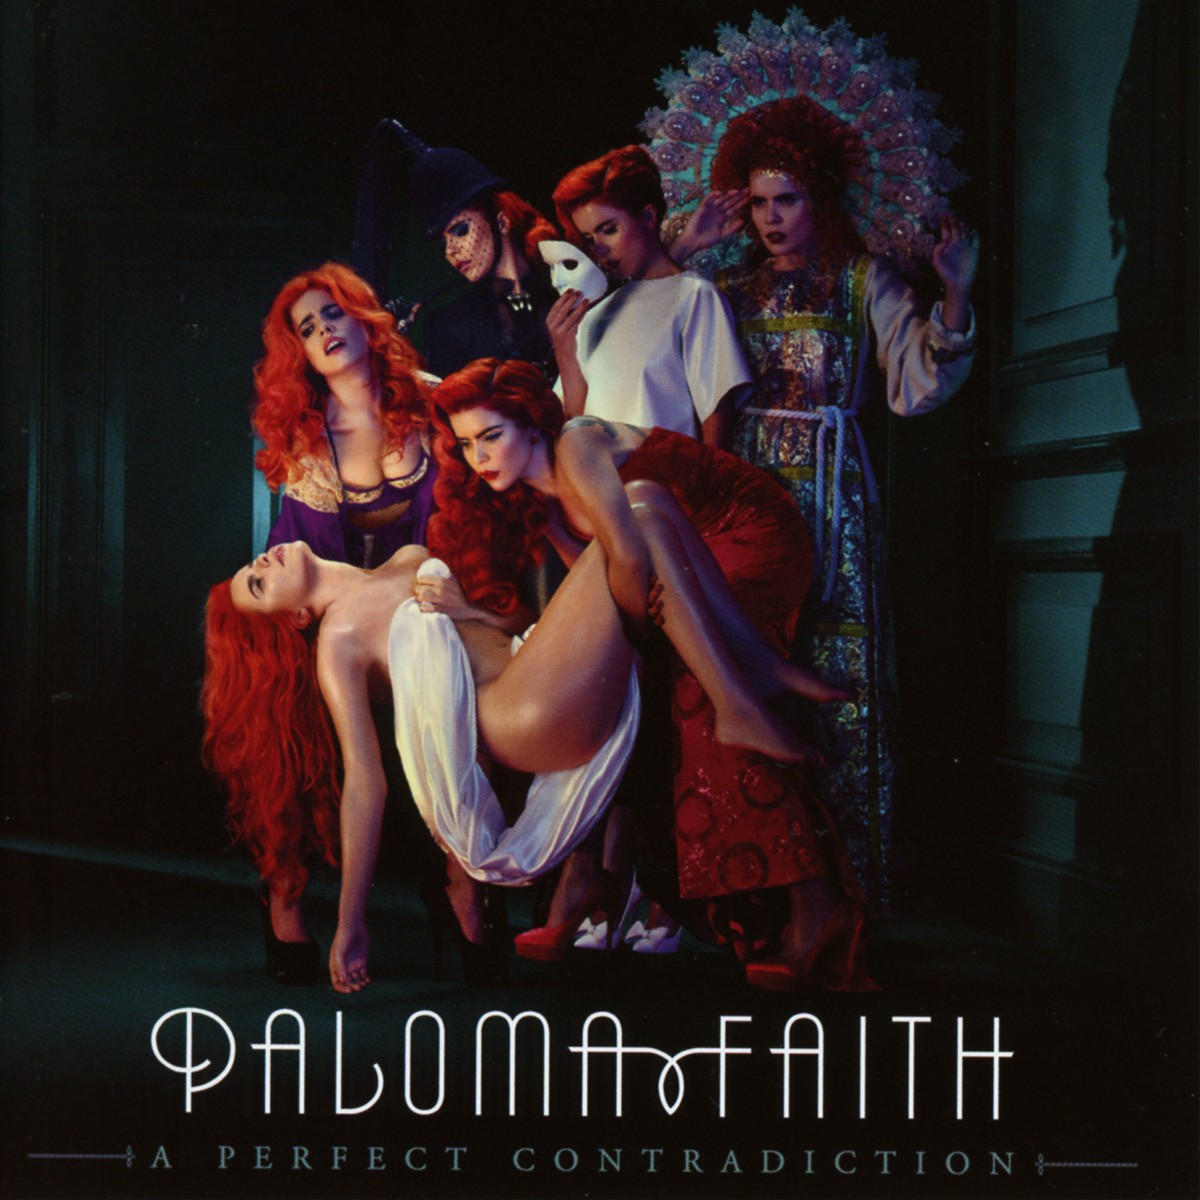 Paloma Faith - A Perfect (Deluxe) (CD) - Contradiction